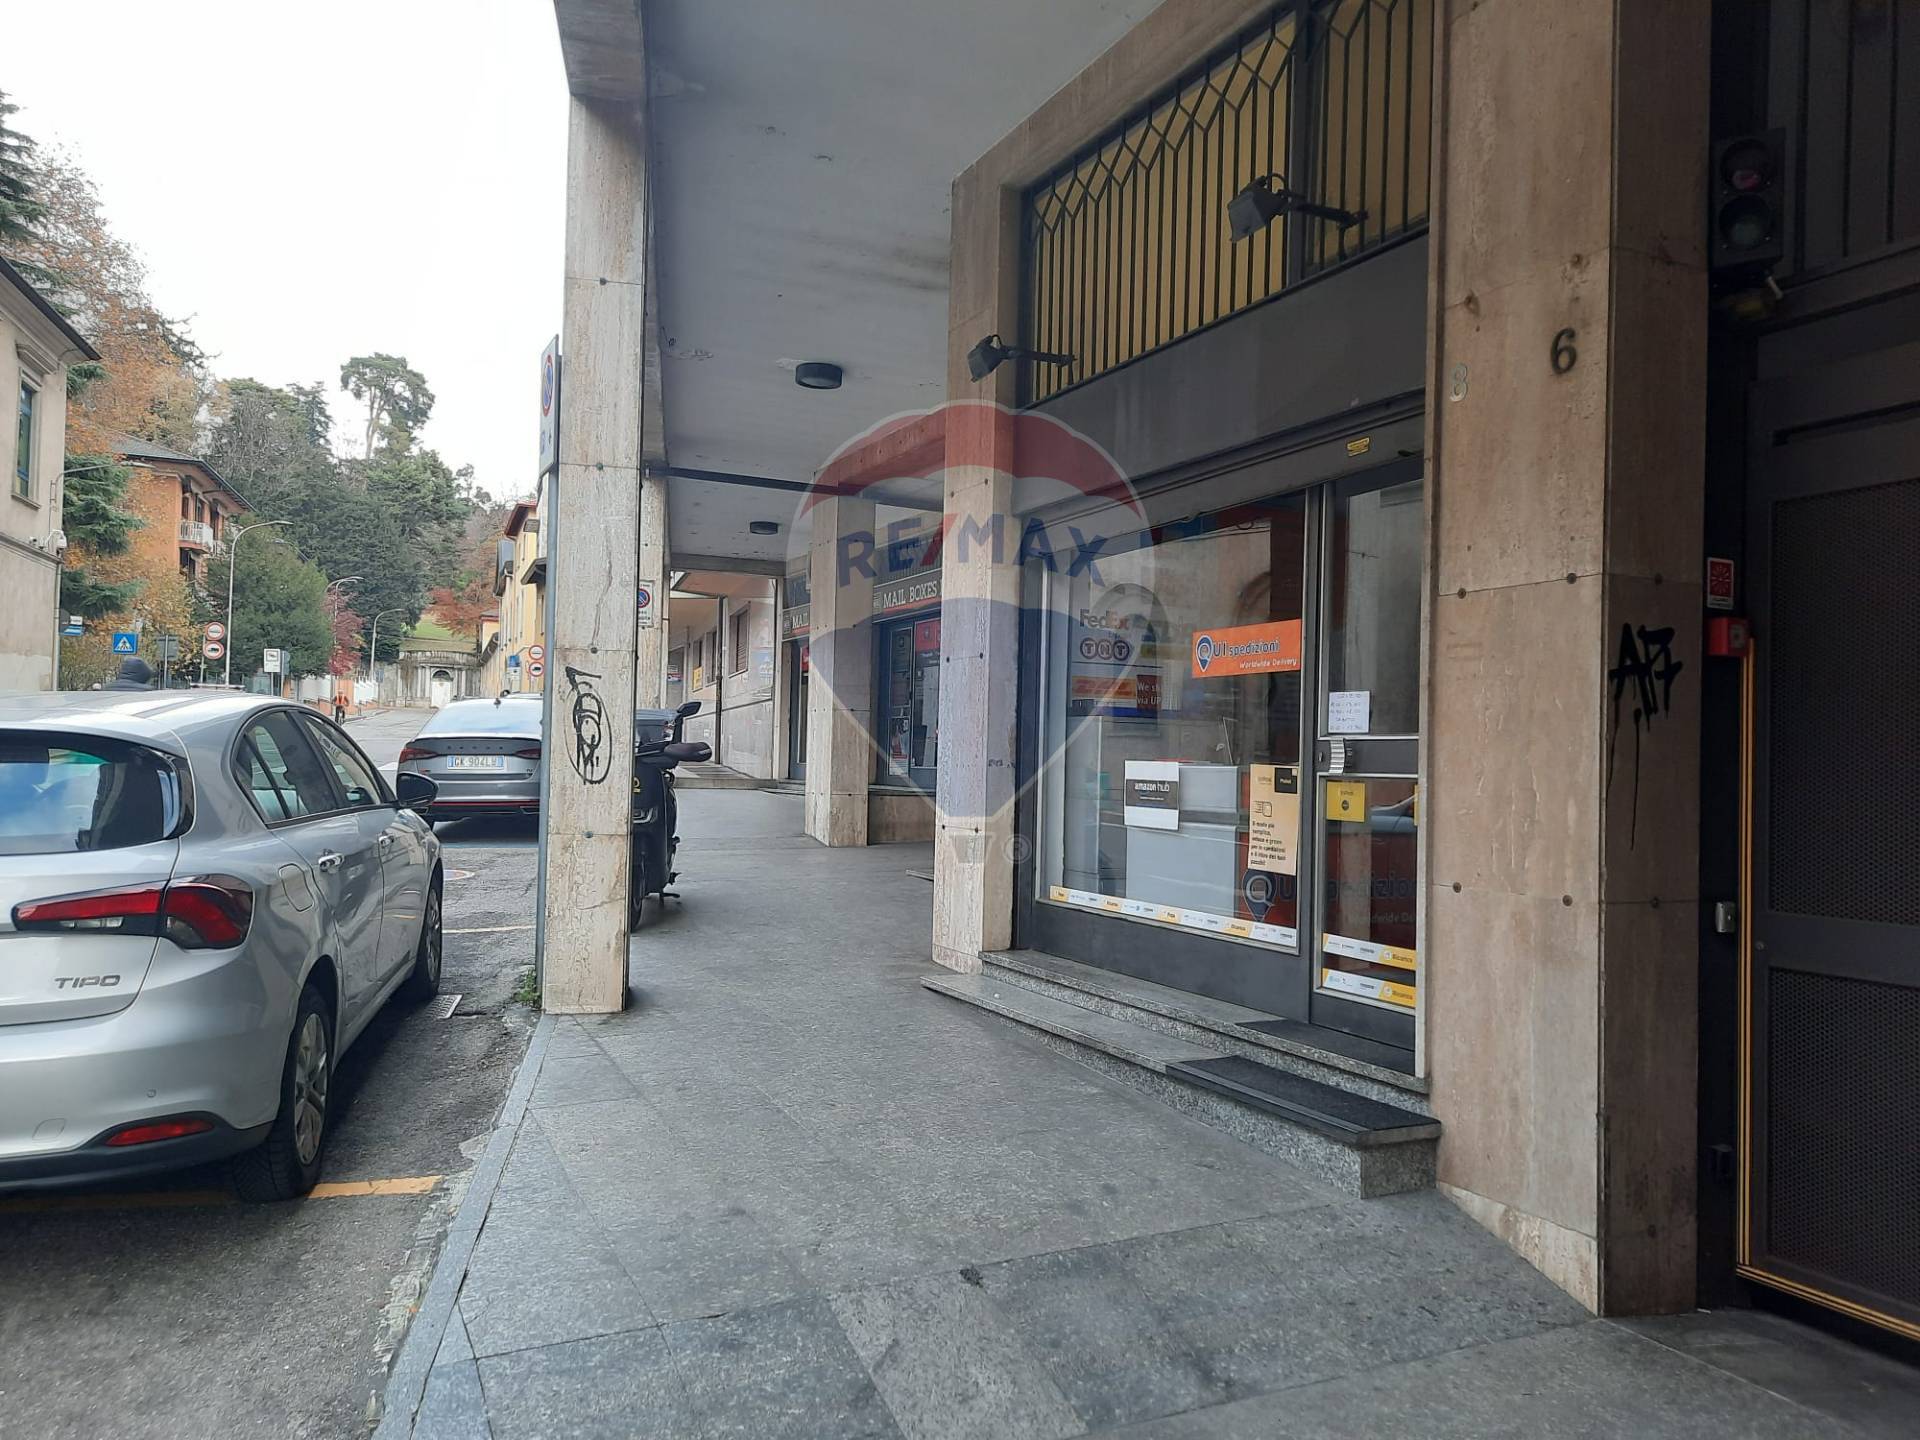 Affitto Negozio Commerciale/Industriale Varese 462249